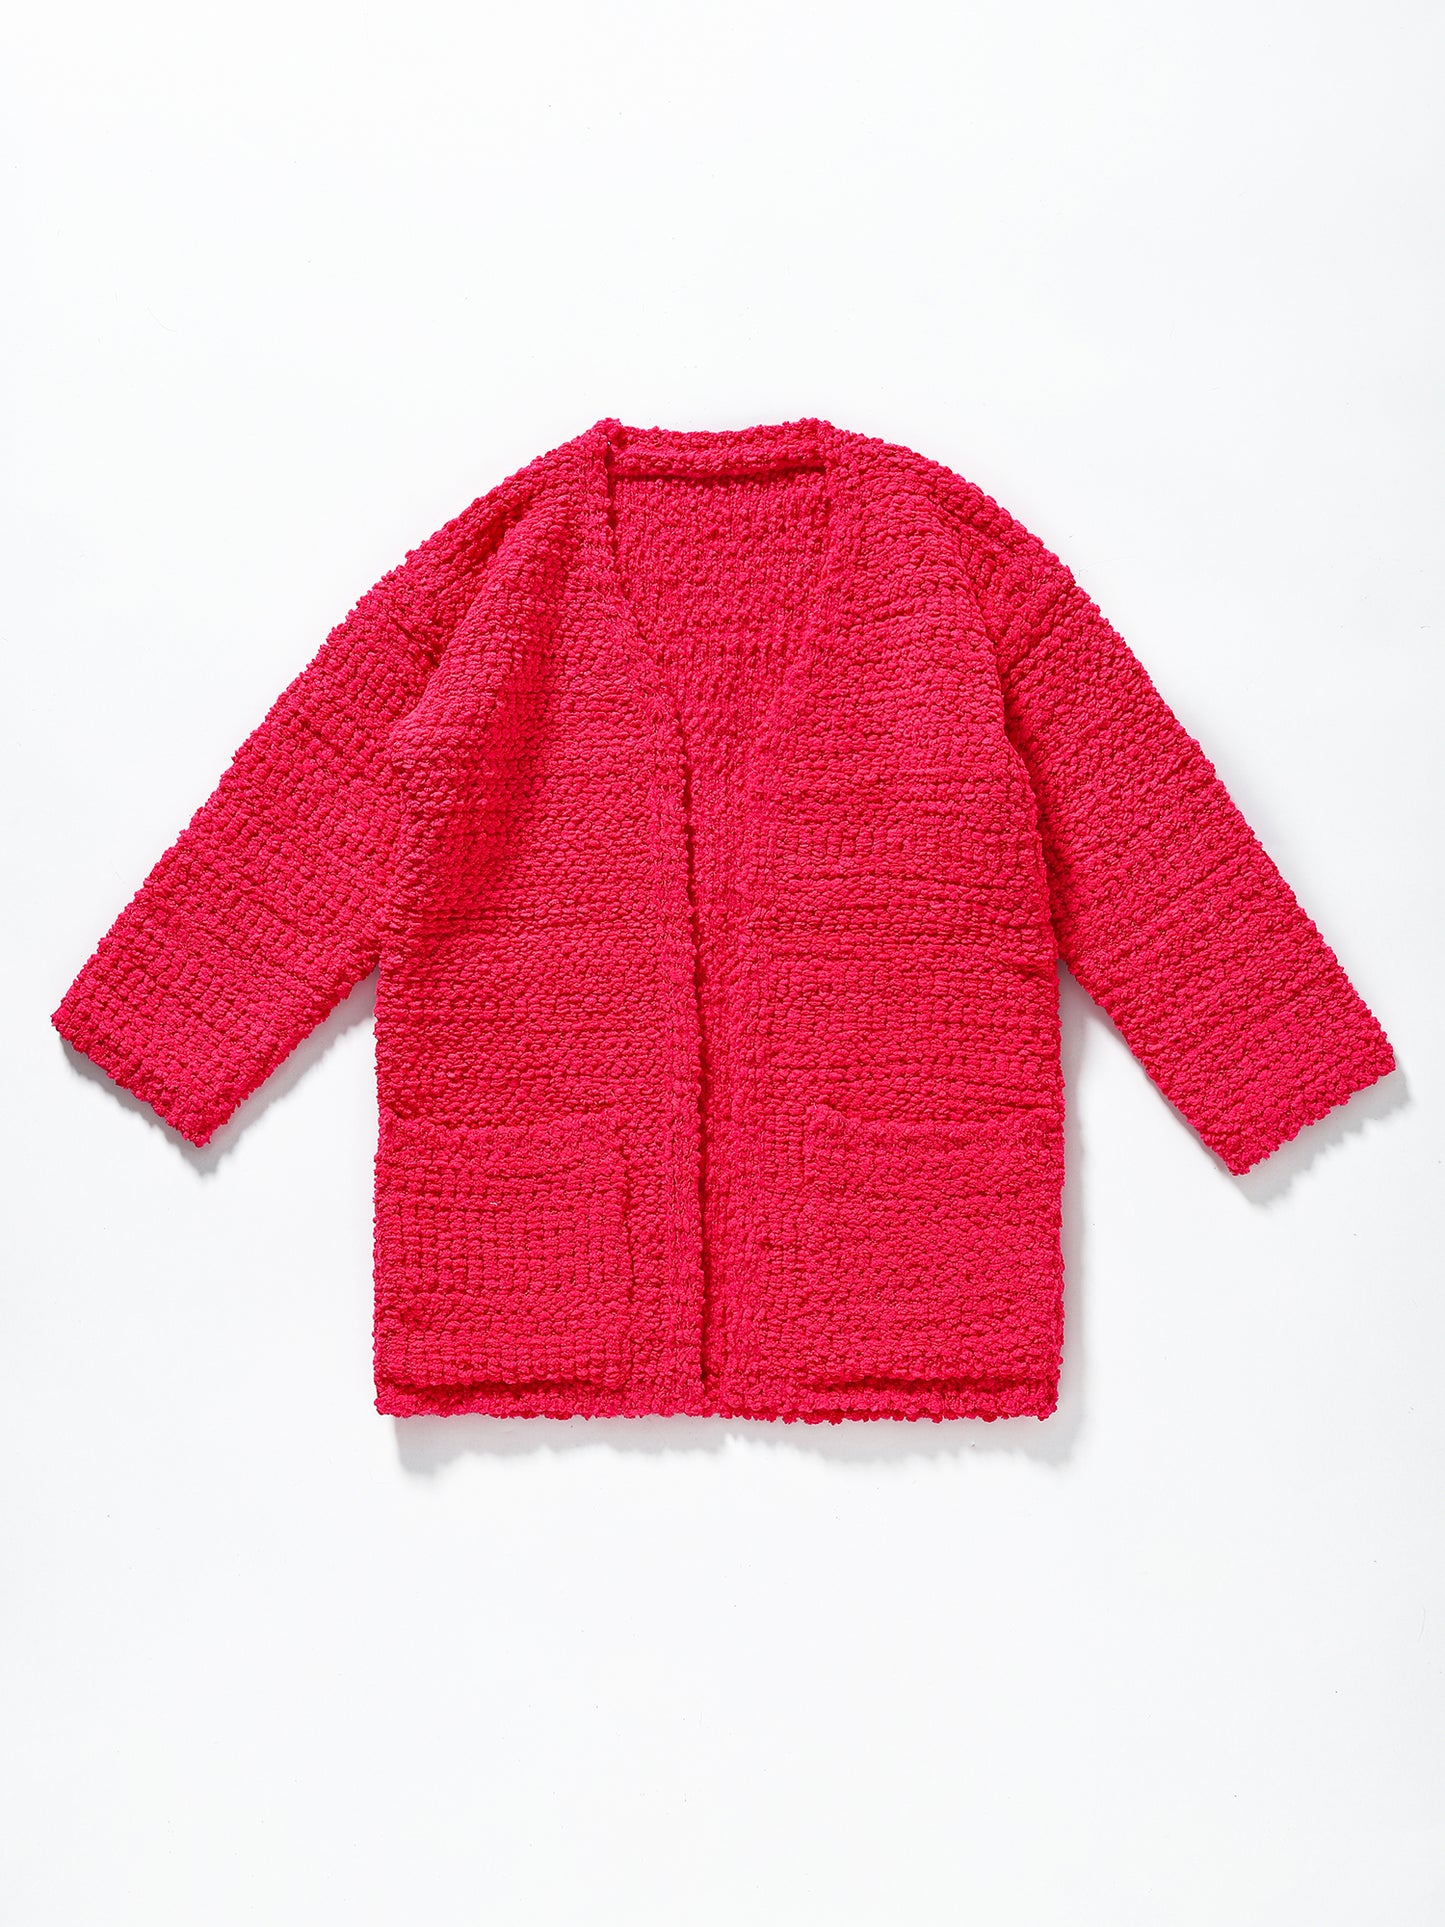 Girls Hot Pink Cardigan Sweater